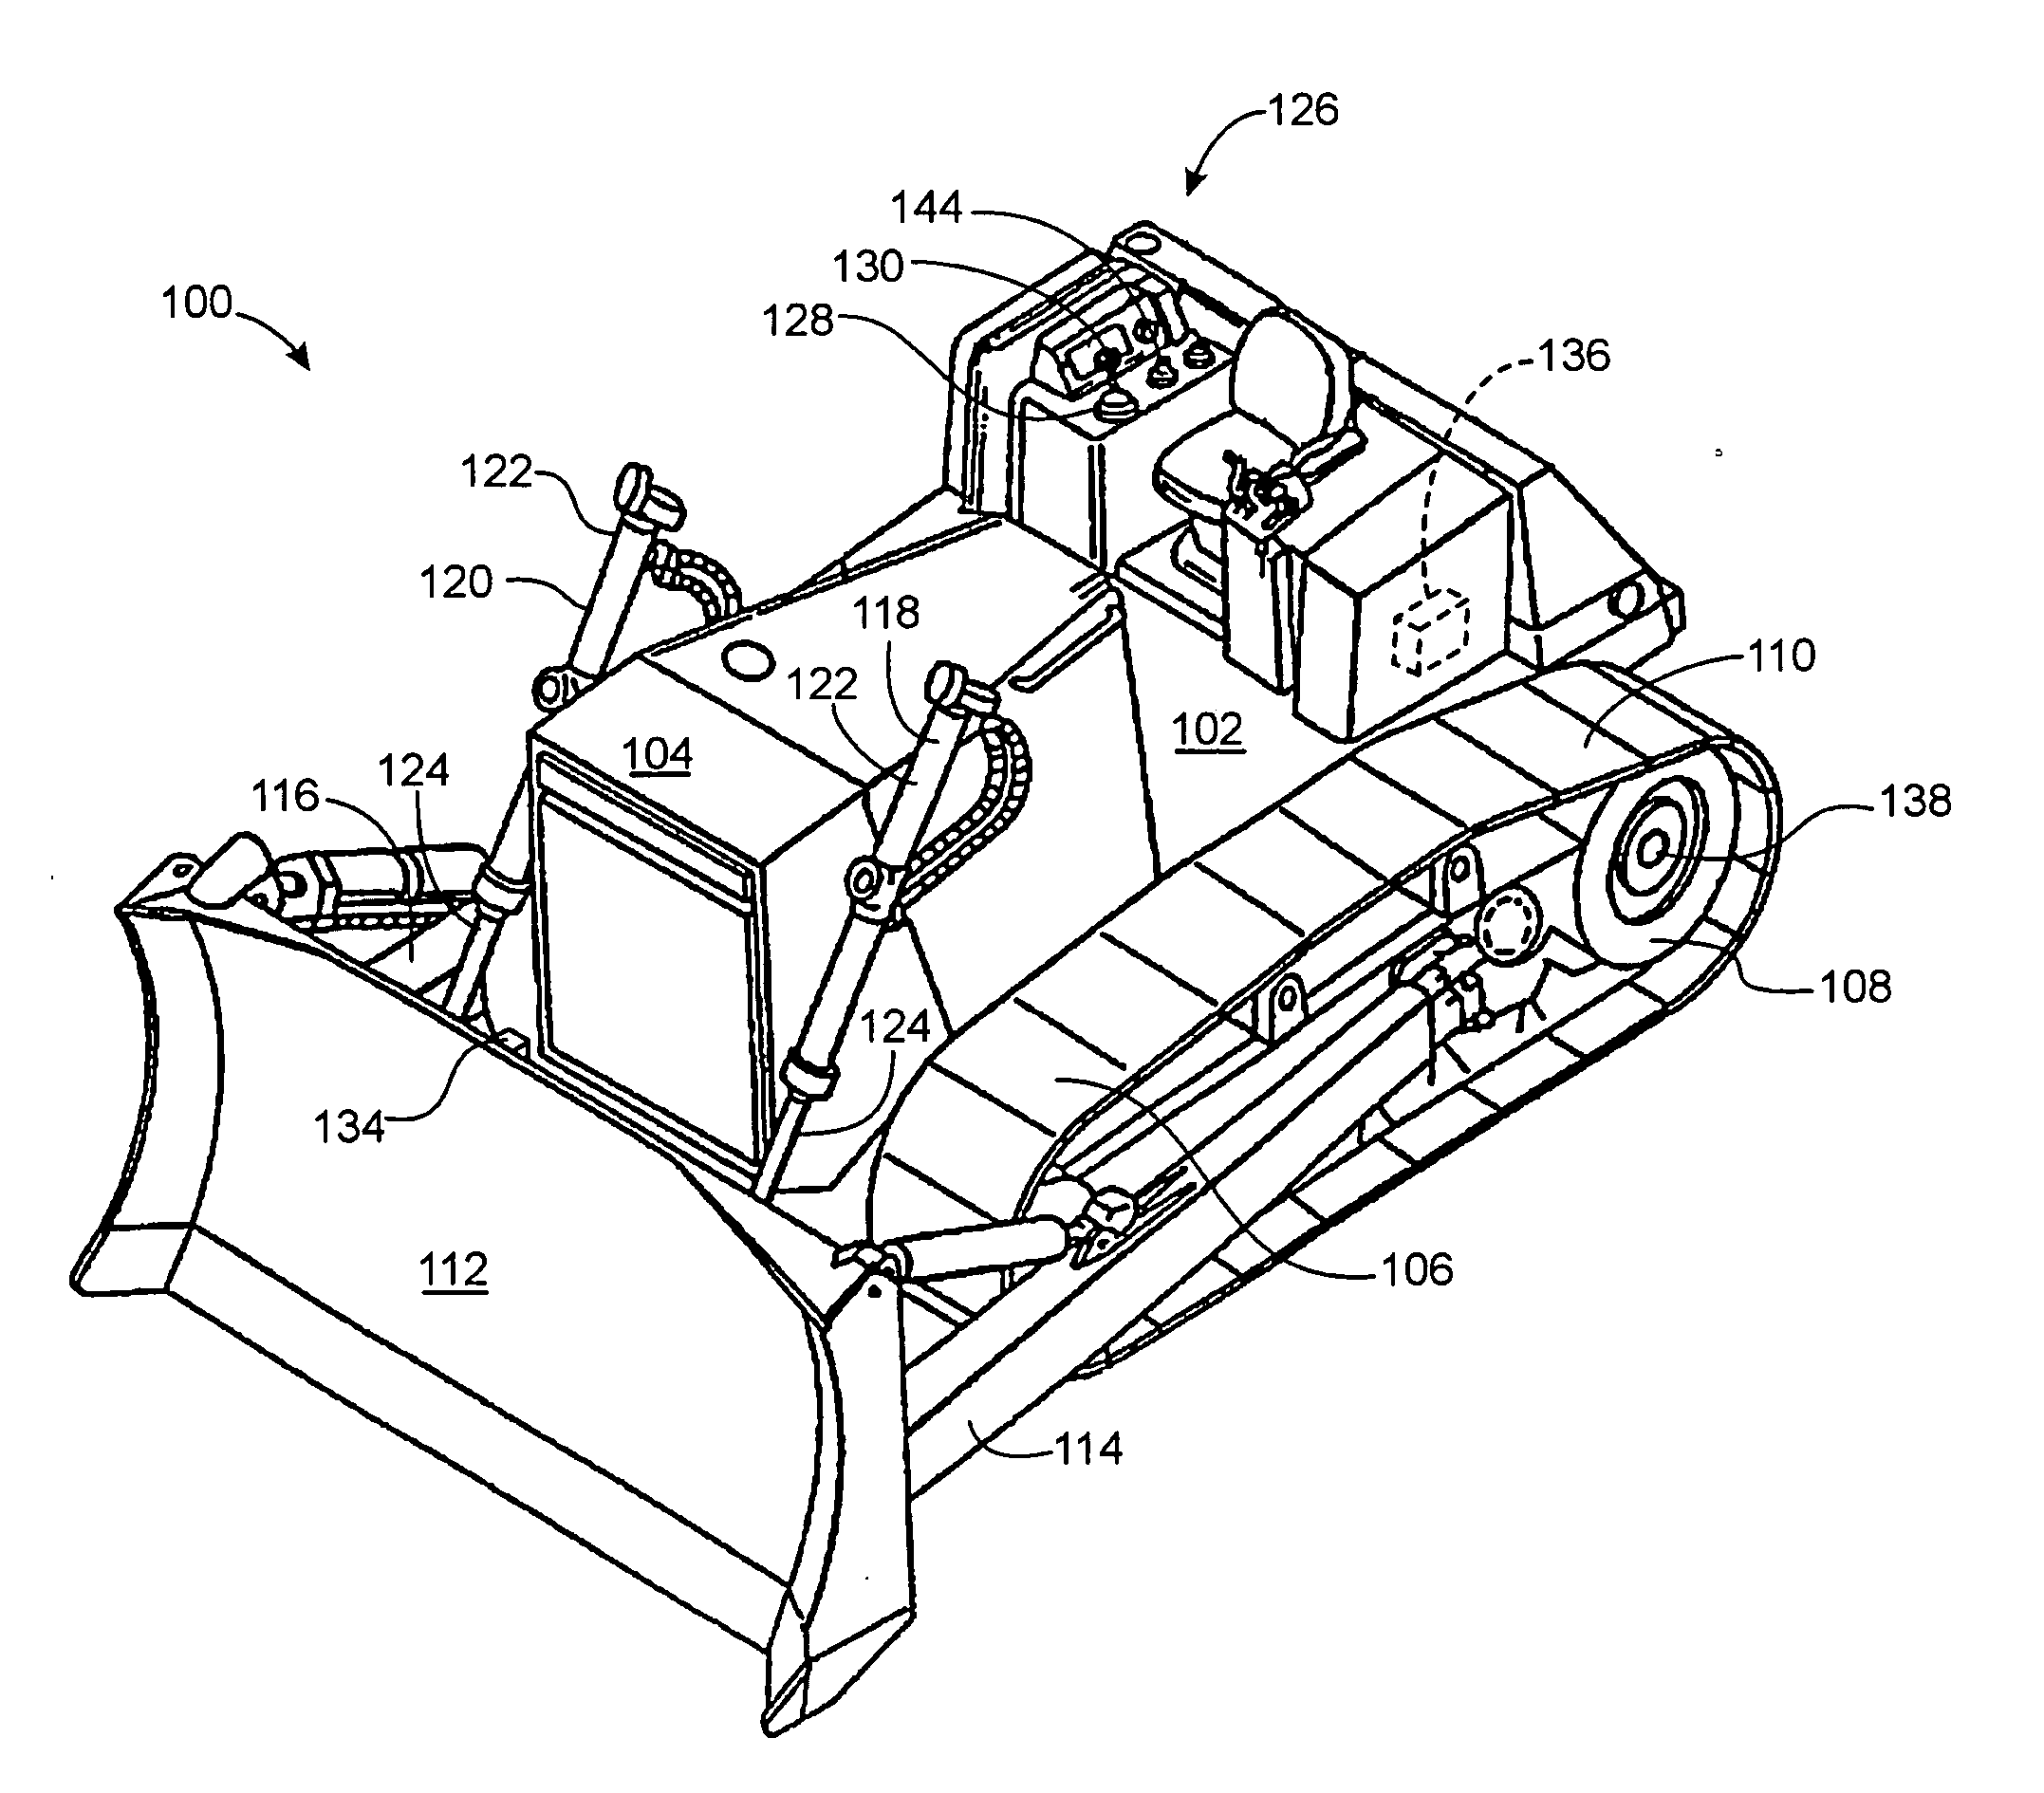 Bulldozer autograding system